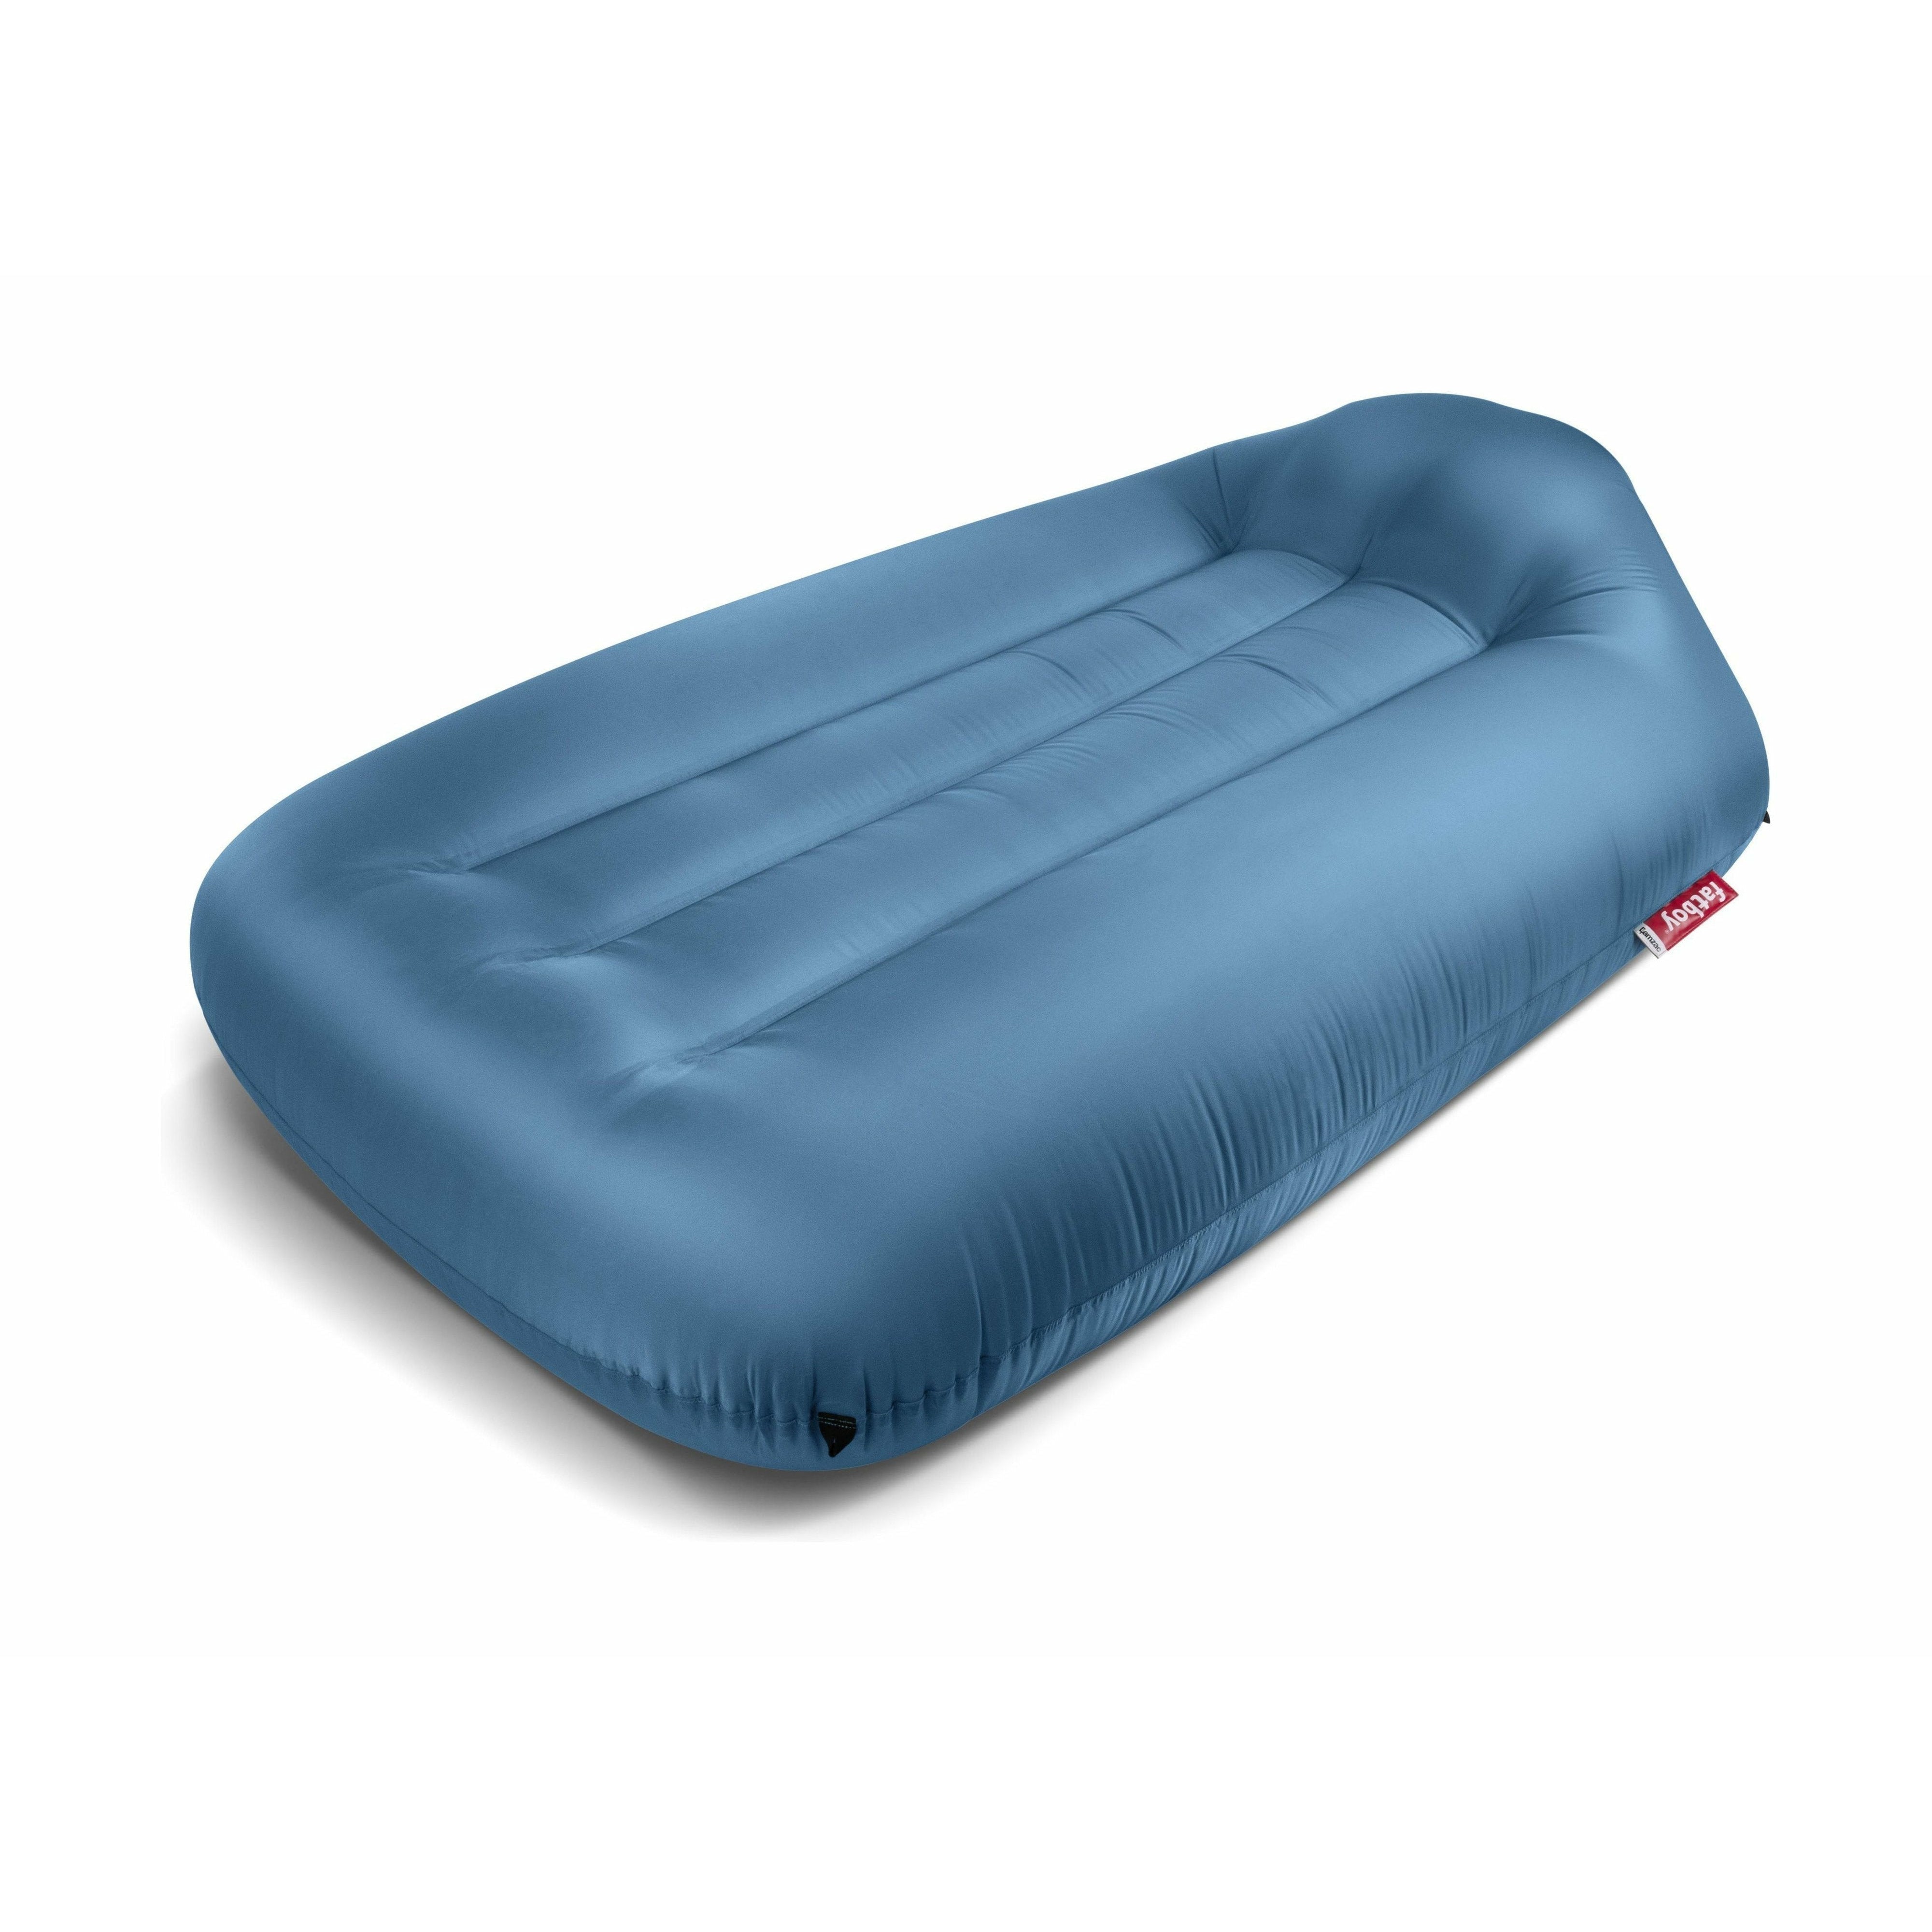 Fatboy Lamzac L Inflatable Air Sofa 3.0, Sky Blue